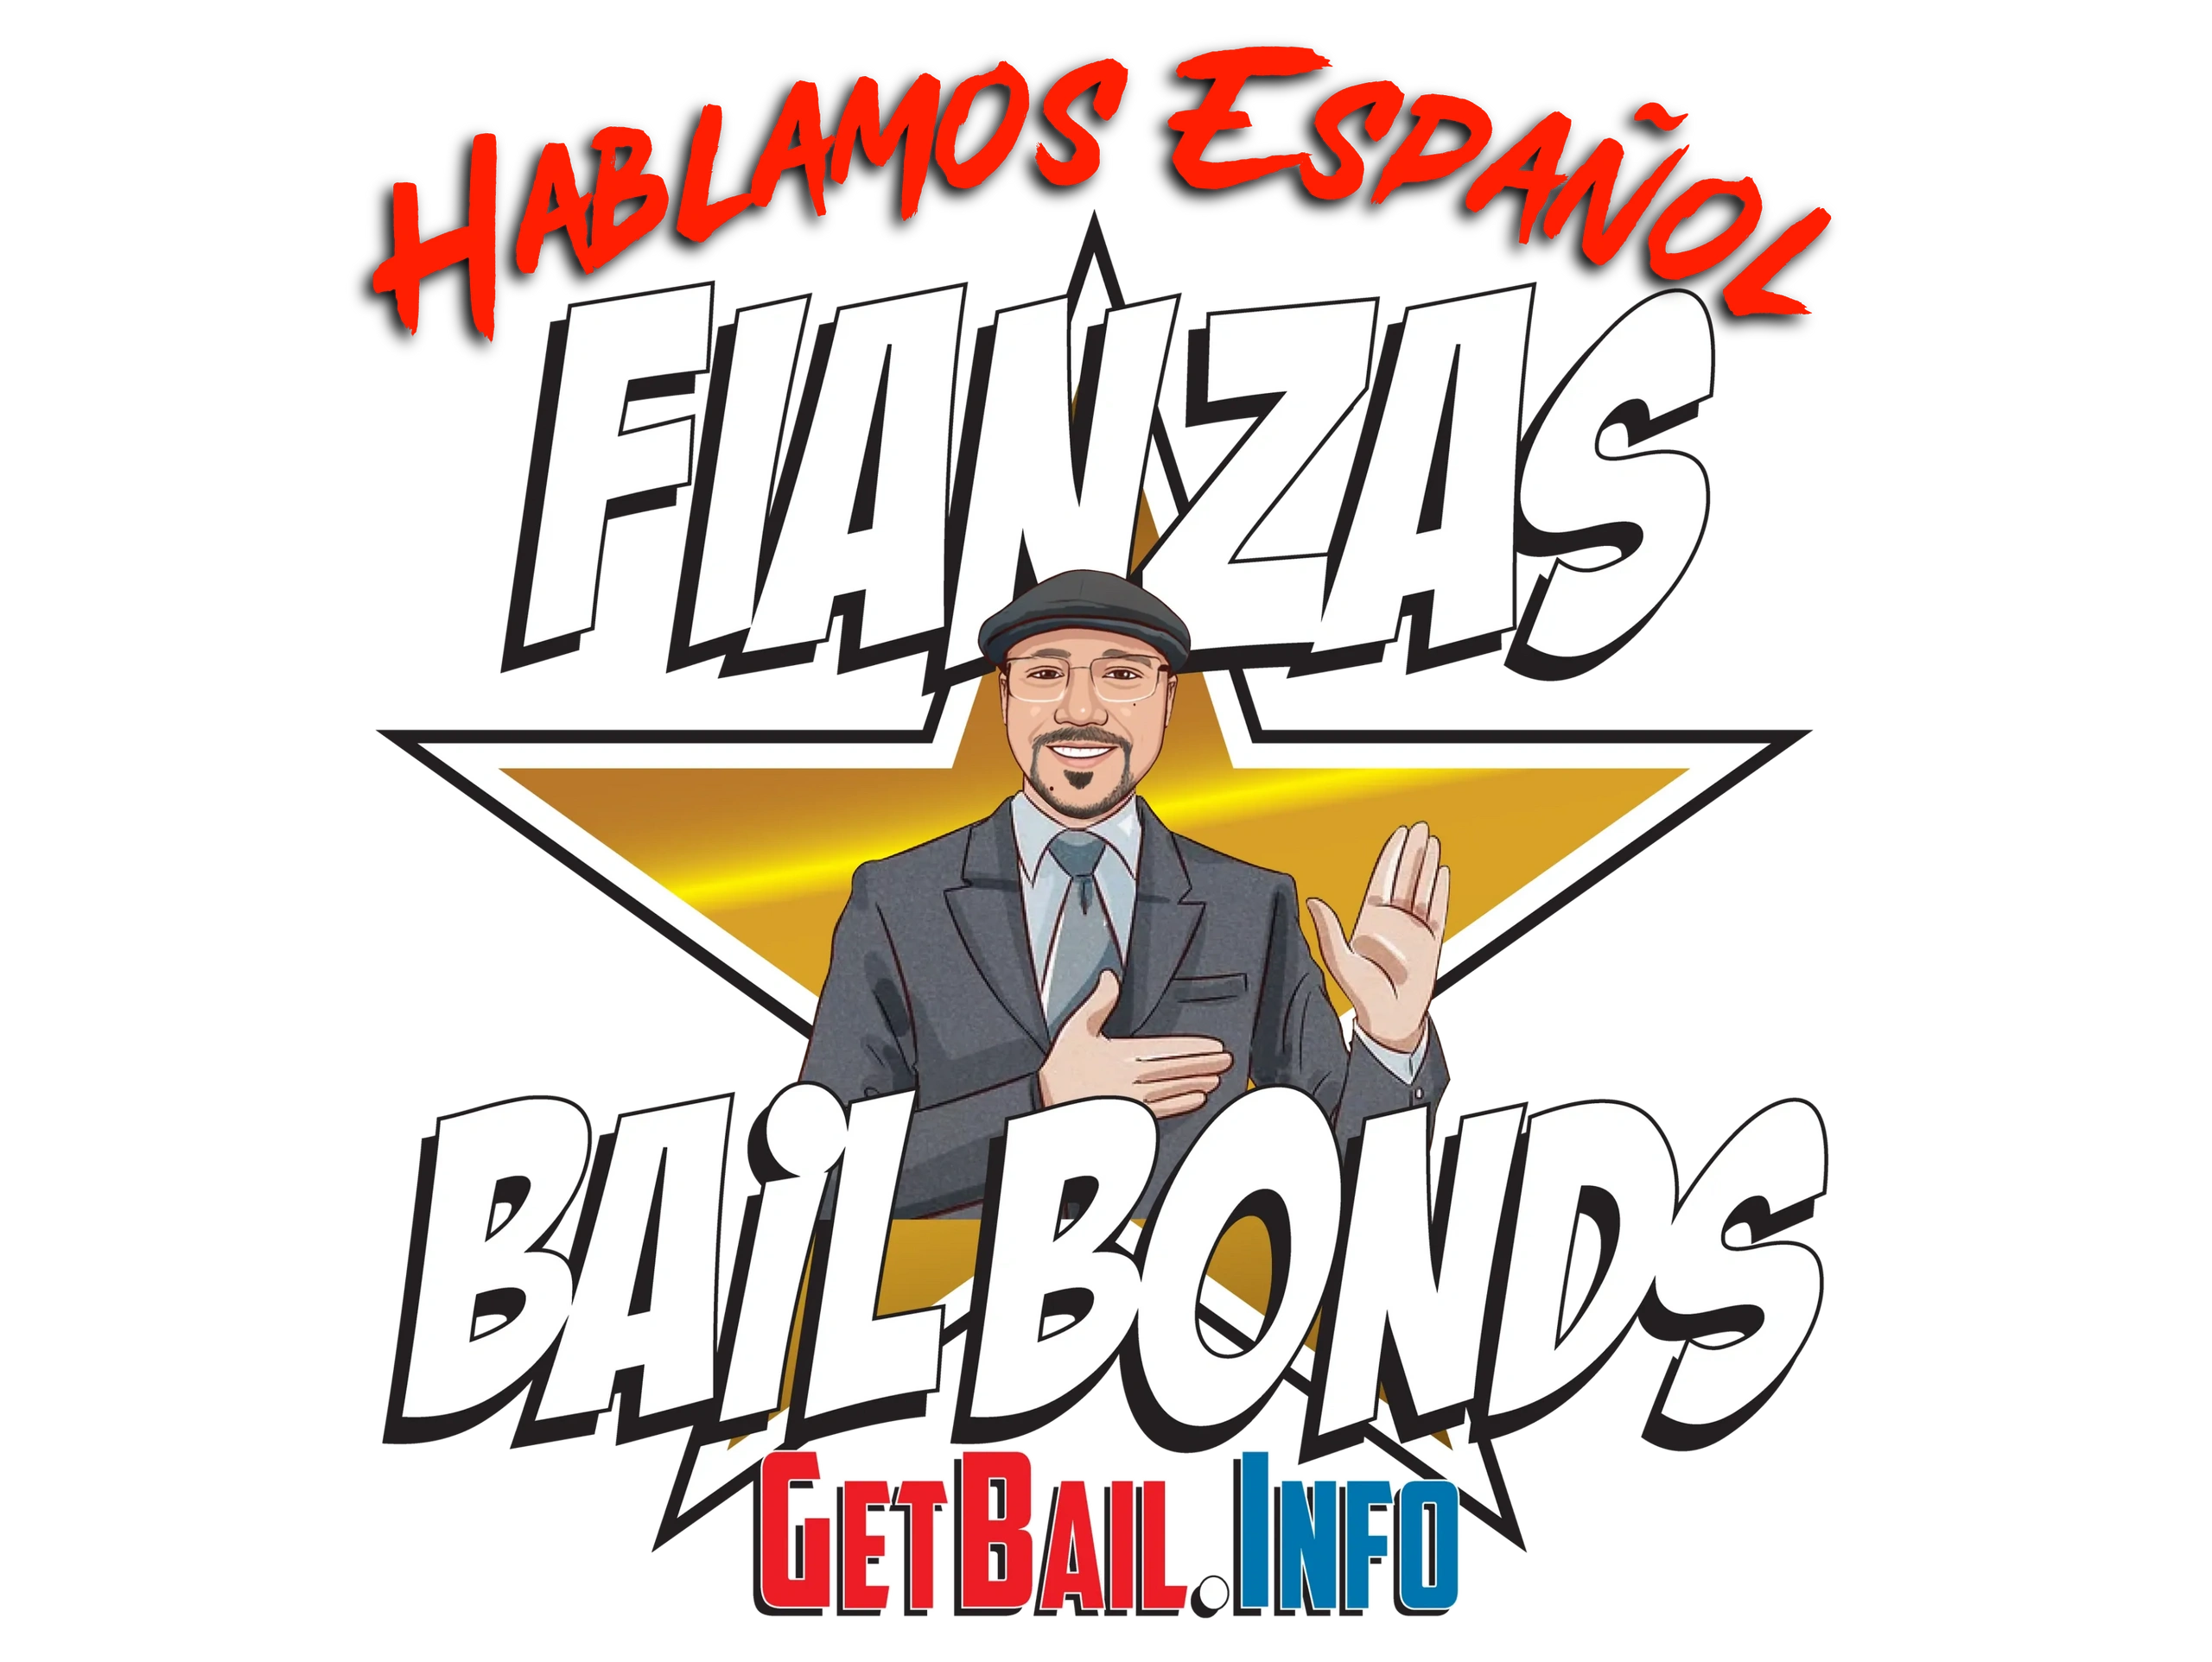 Cesar Navarro, Bail Bondsman, Gold Radian Star, Fianzas Bail Bonds, Get Bail Info, Hablamos Español.